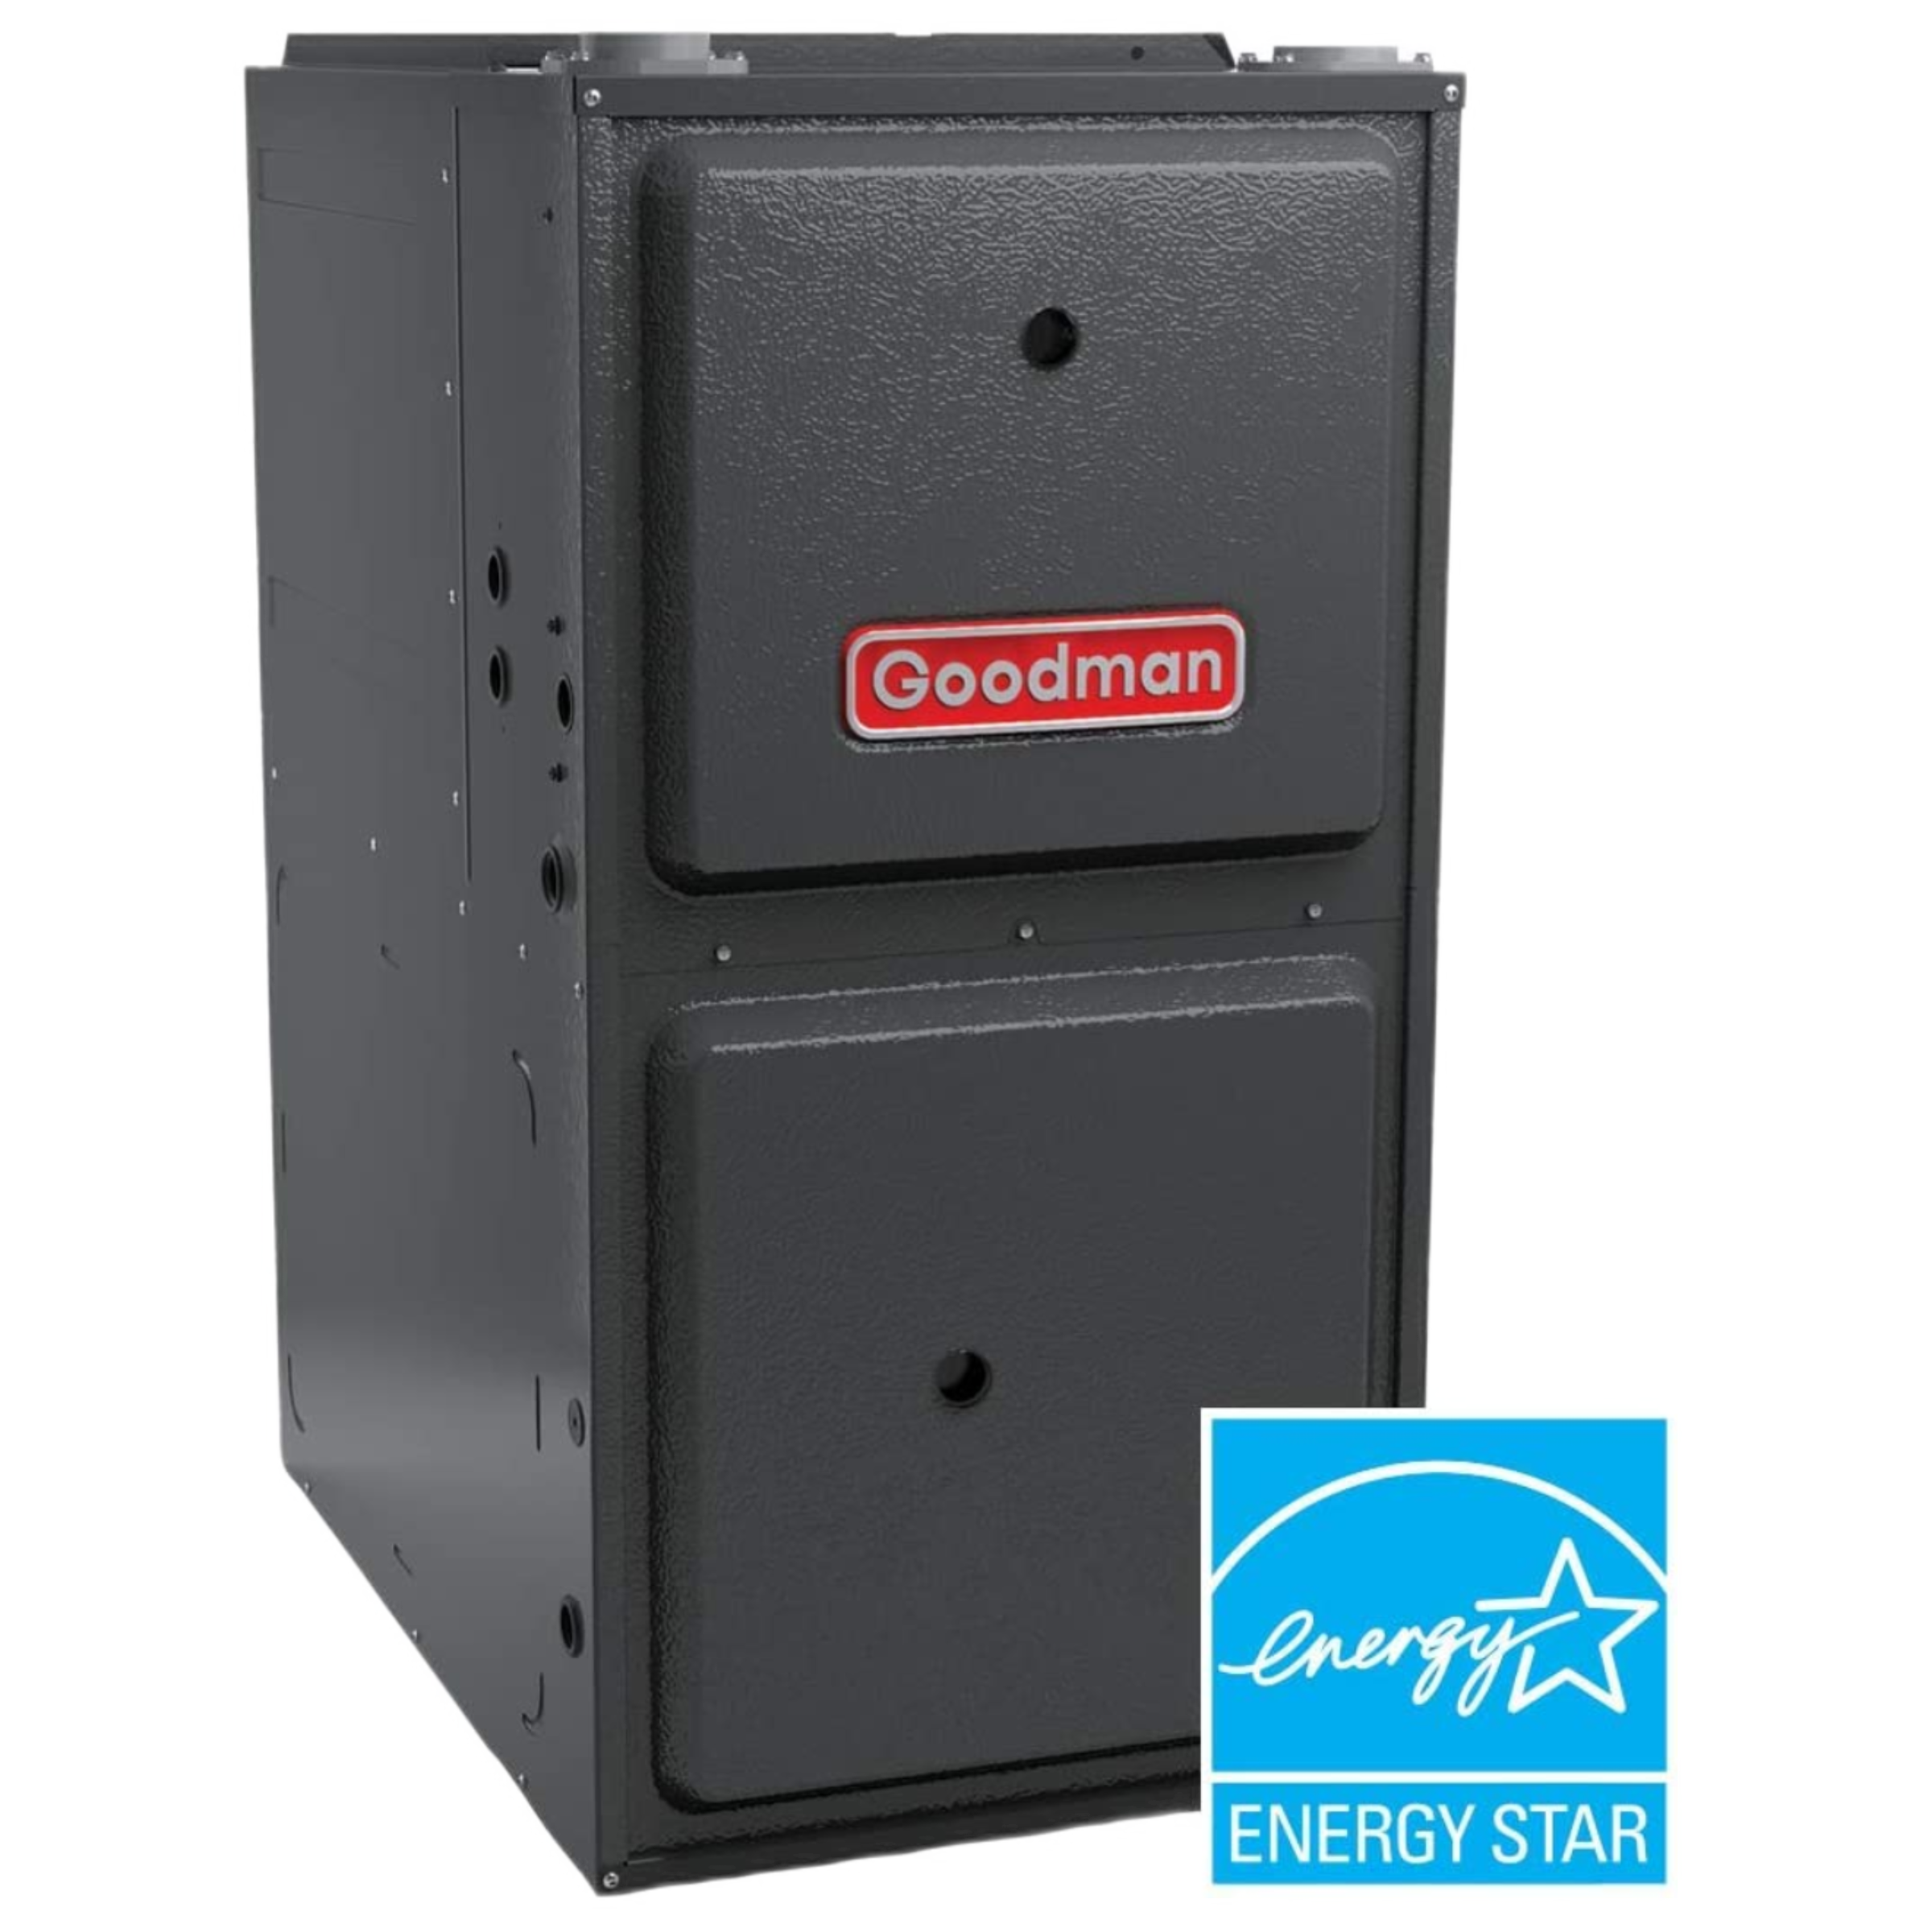 GMVC96 Goodman Gas Furnace Series, Upflow/Horizontal, 96% AFUE, Variable Speed ECM/ComfortBridge, Two-Stage Gas Valve